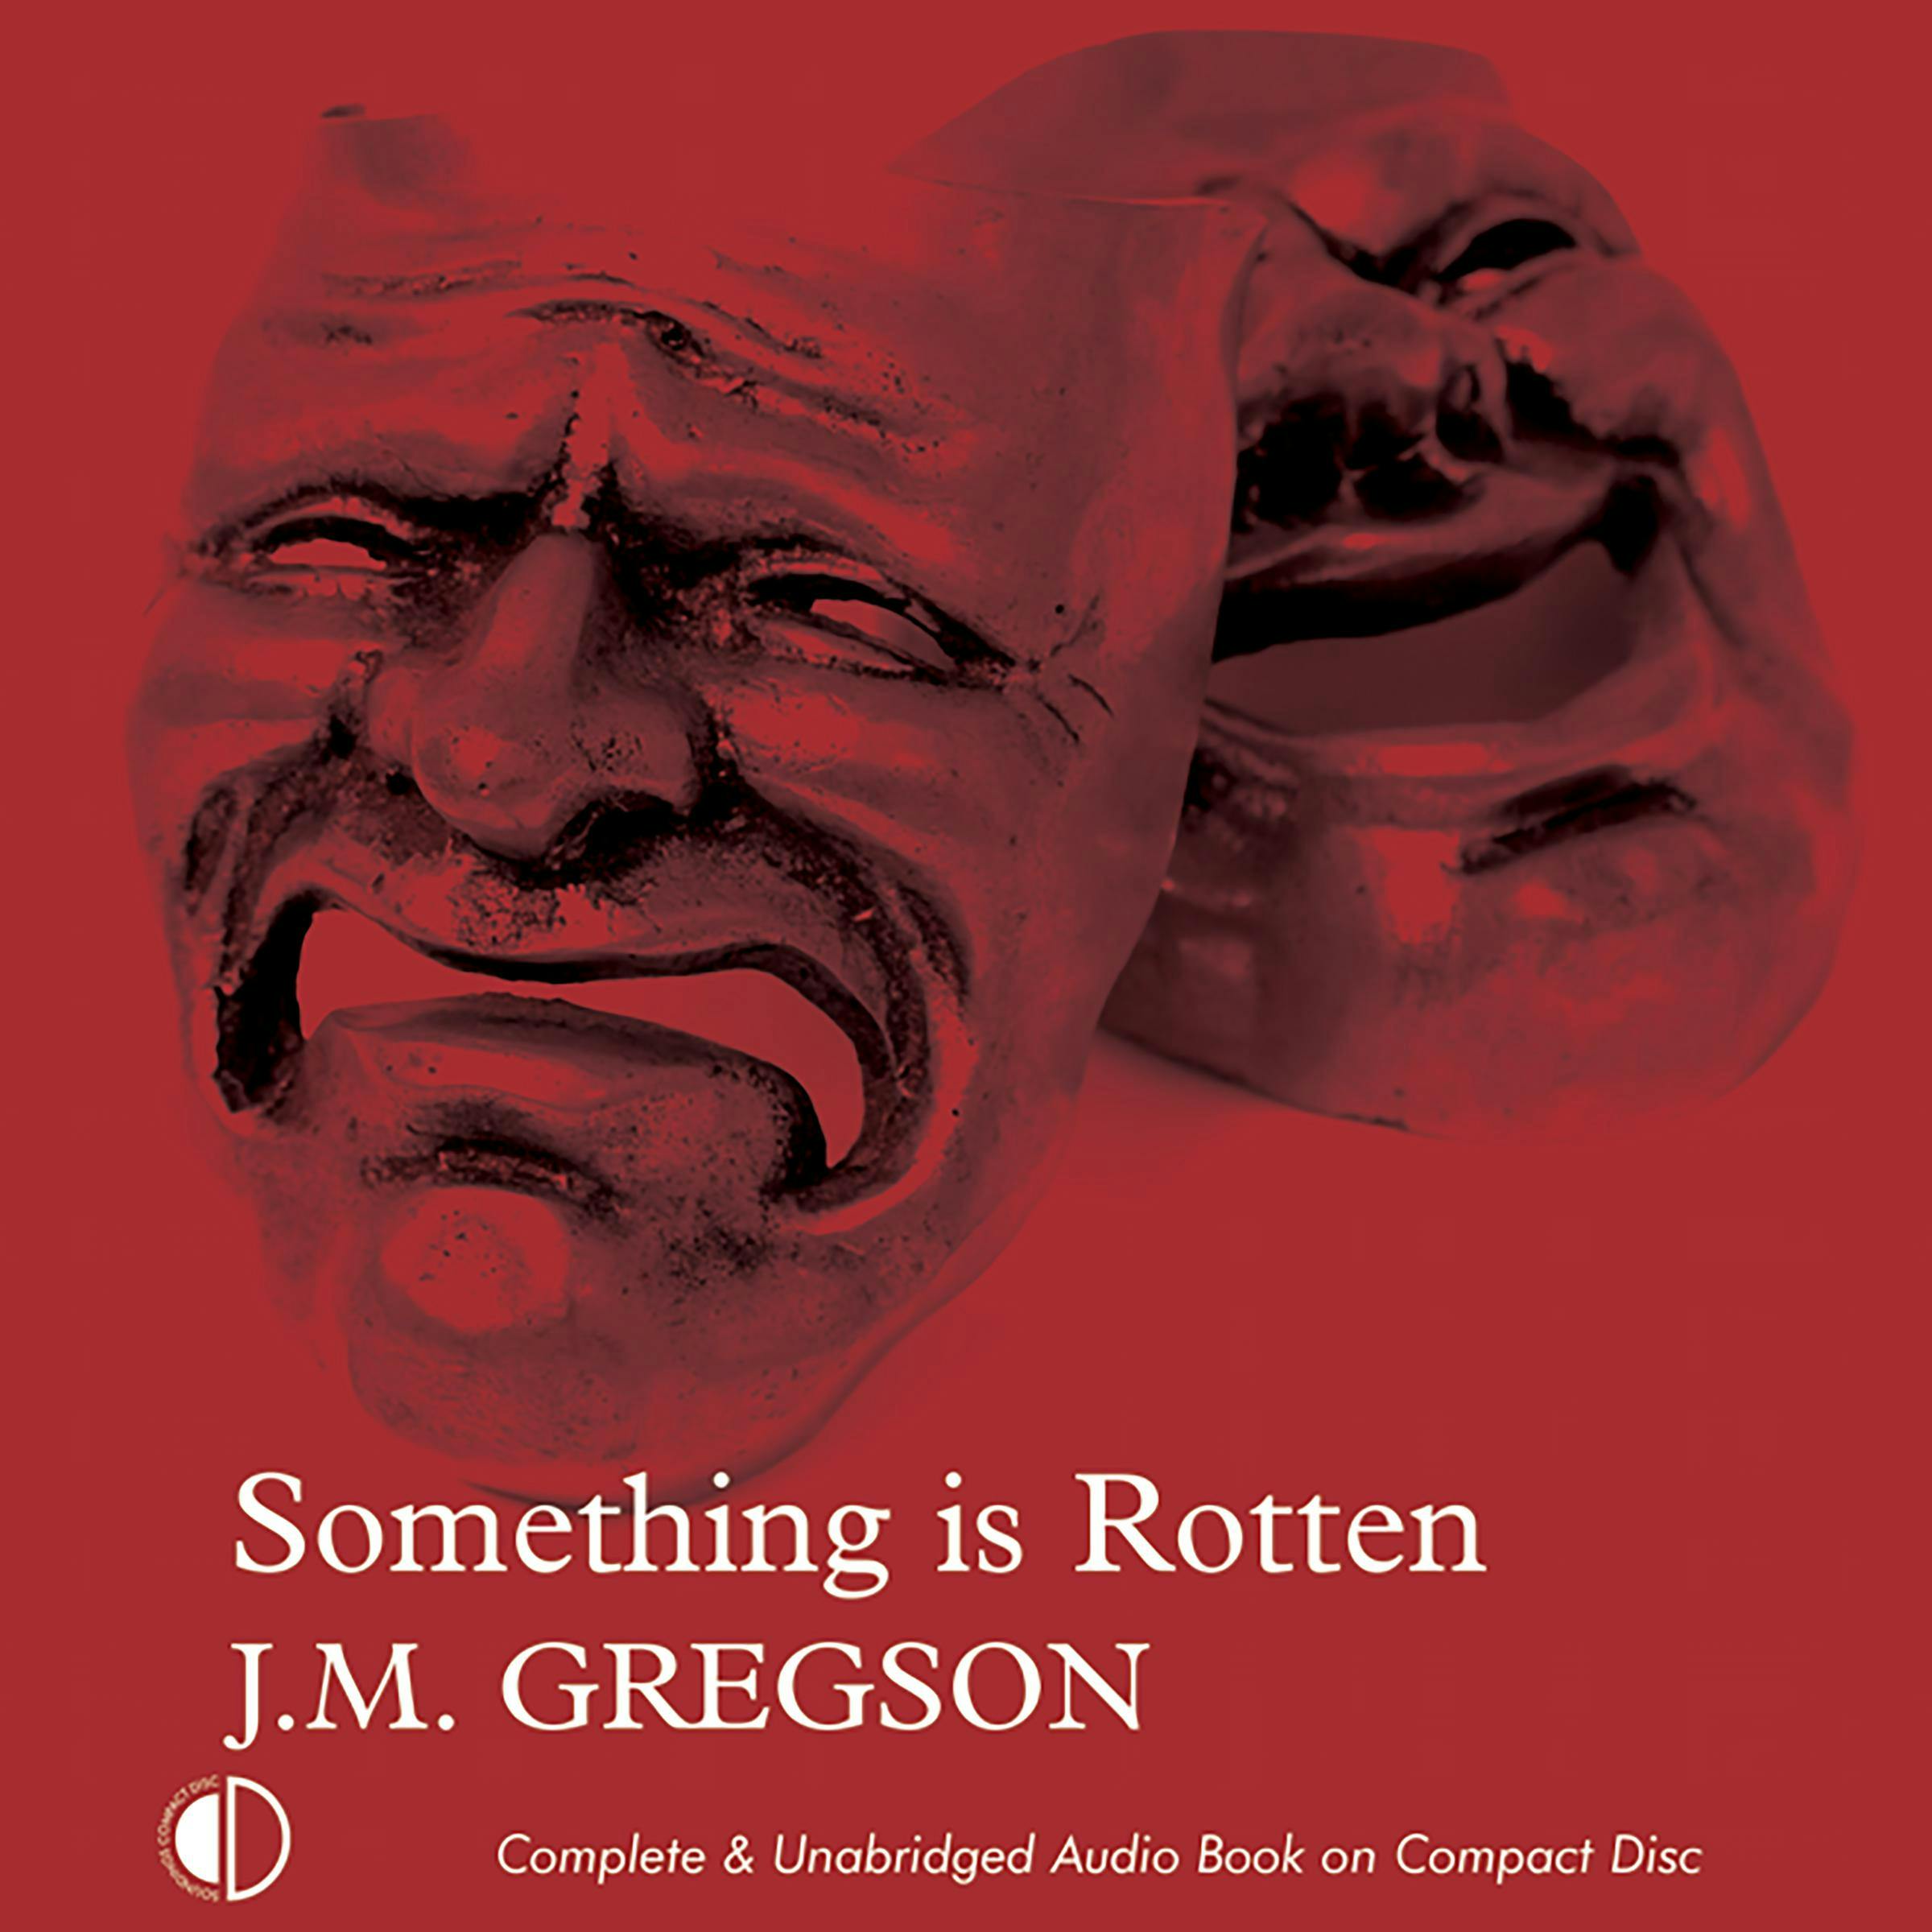 Something is Rotten - J. M. Gregson